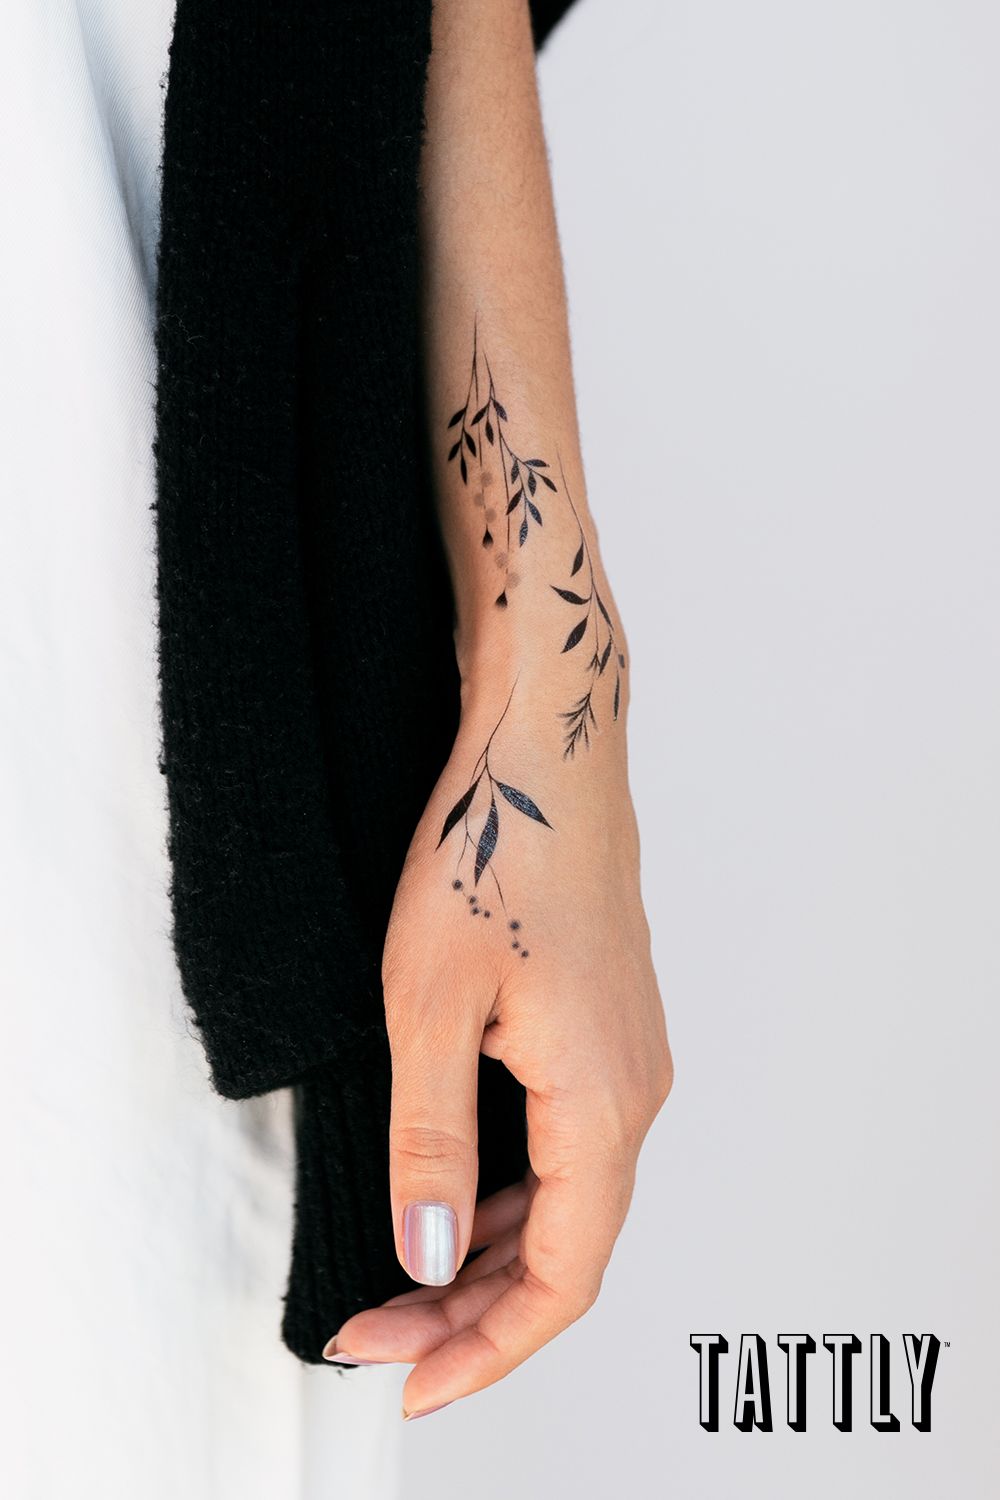 Female Wrist Tattoo Ideas Small Designs (189)